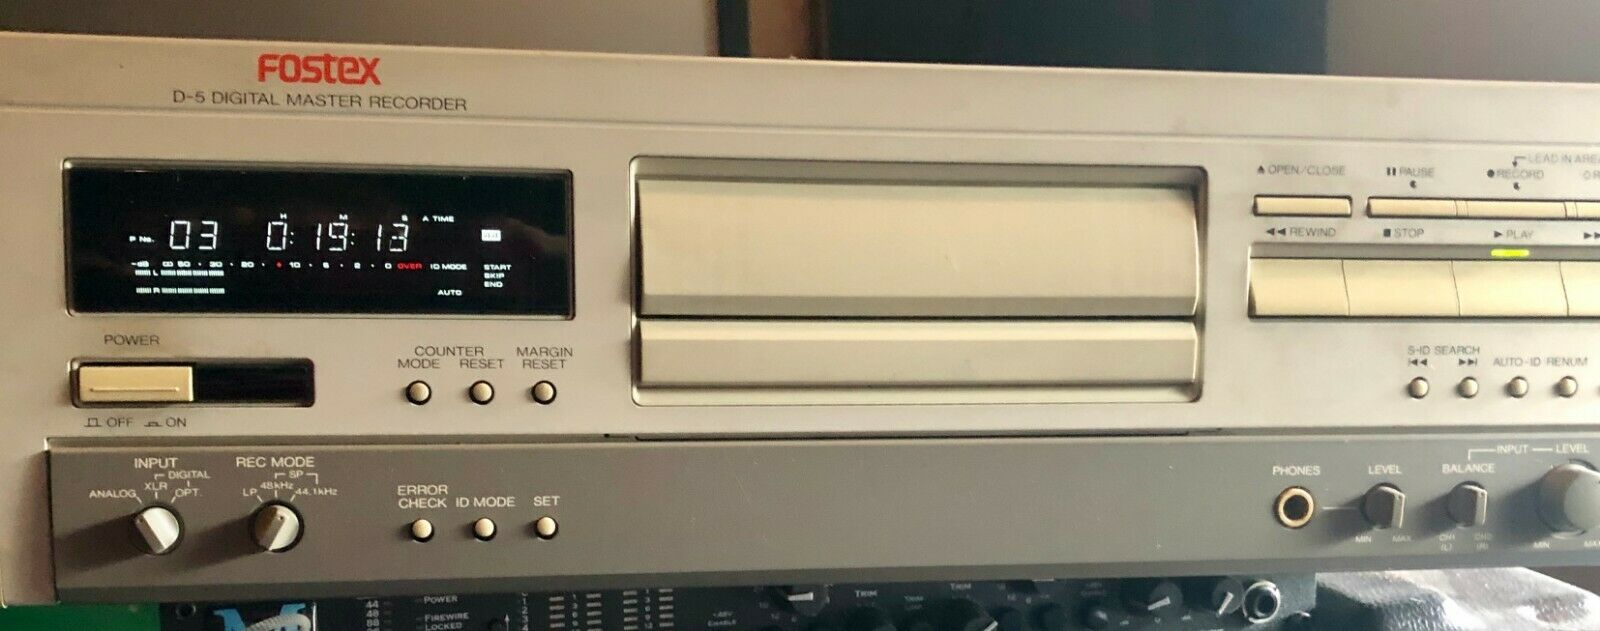 FOSTEX  D-5 Digital Master Recorder DAT D5